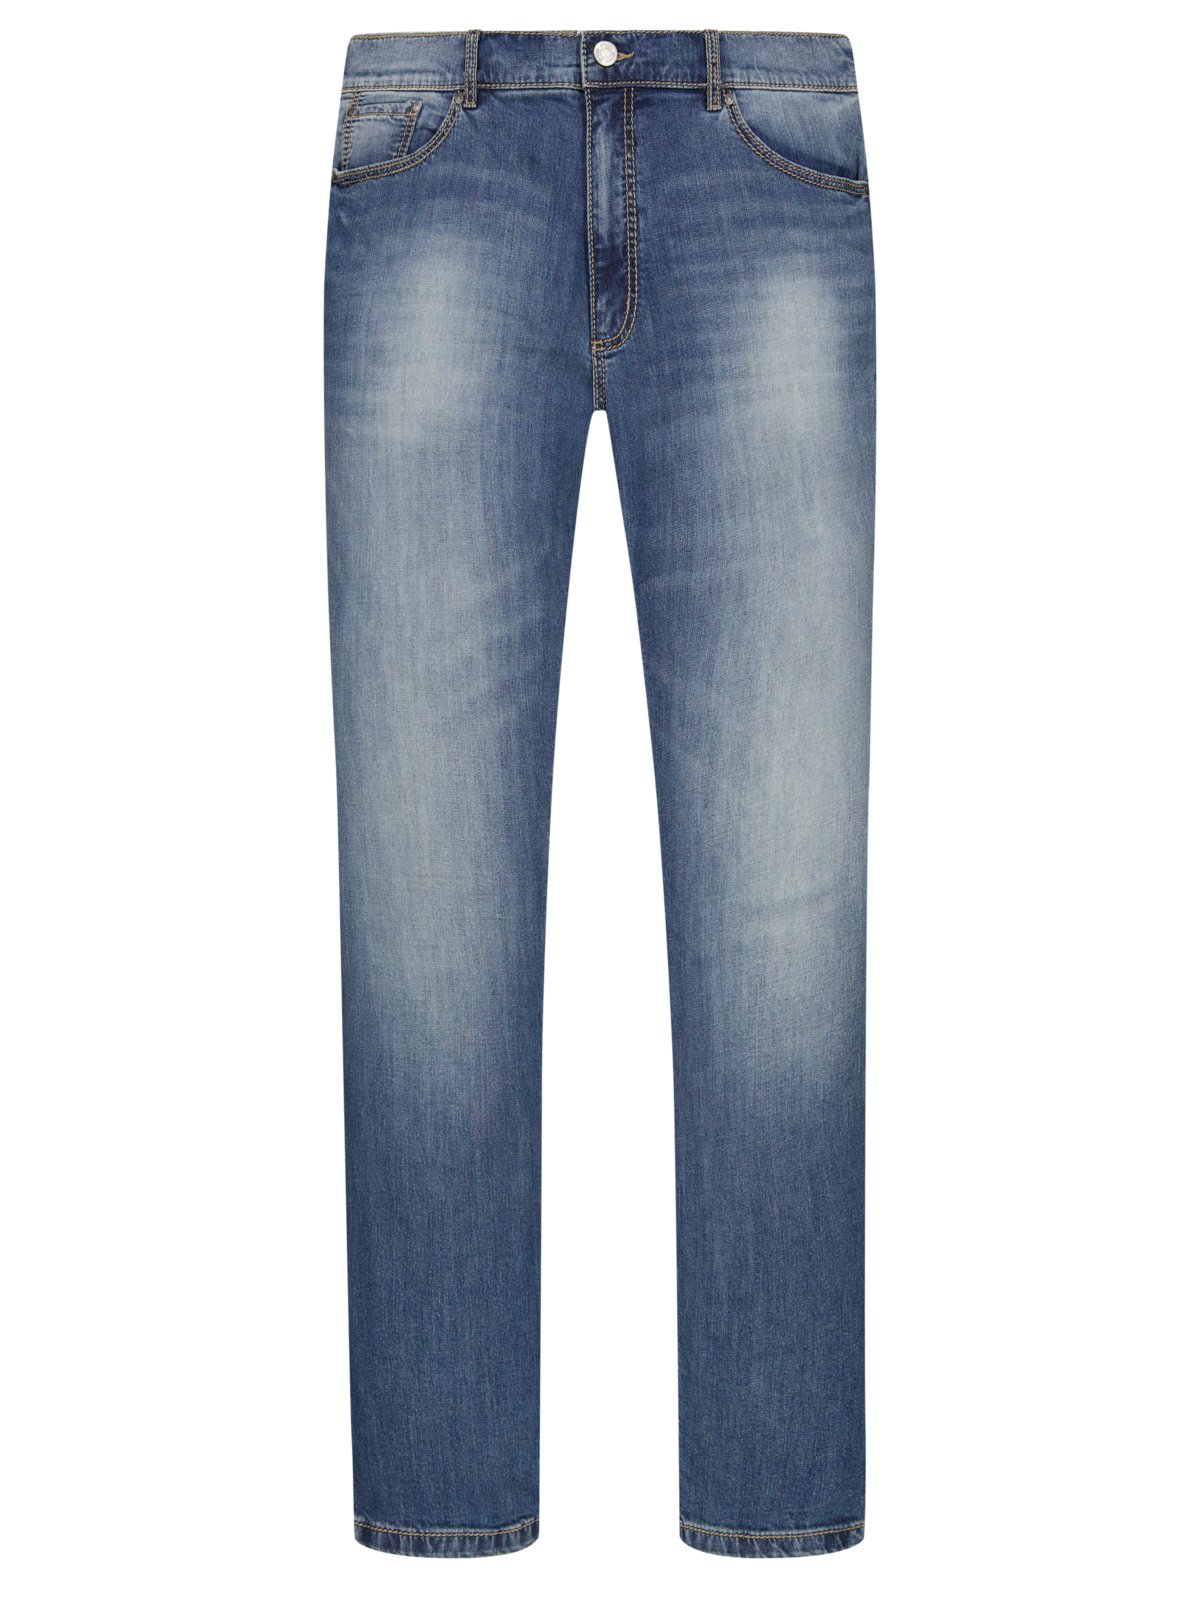 JP1880 5-Pocket Jeans mit Kontrast-Stitching, Flexnamic